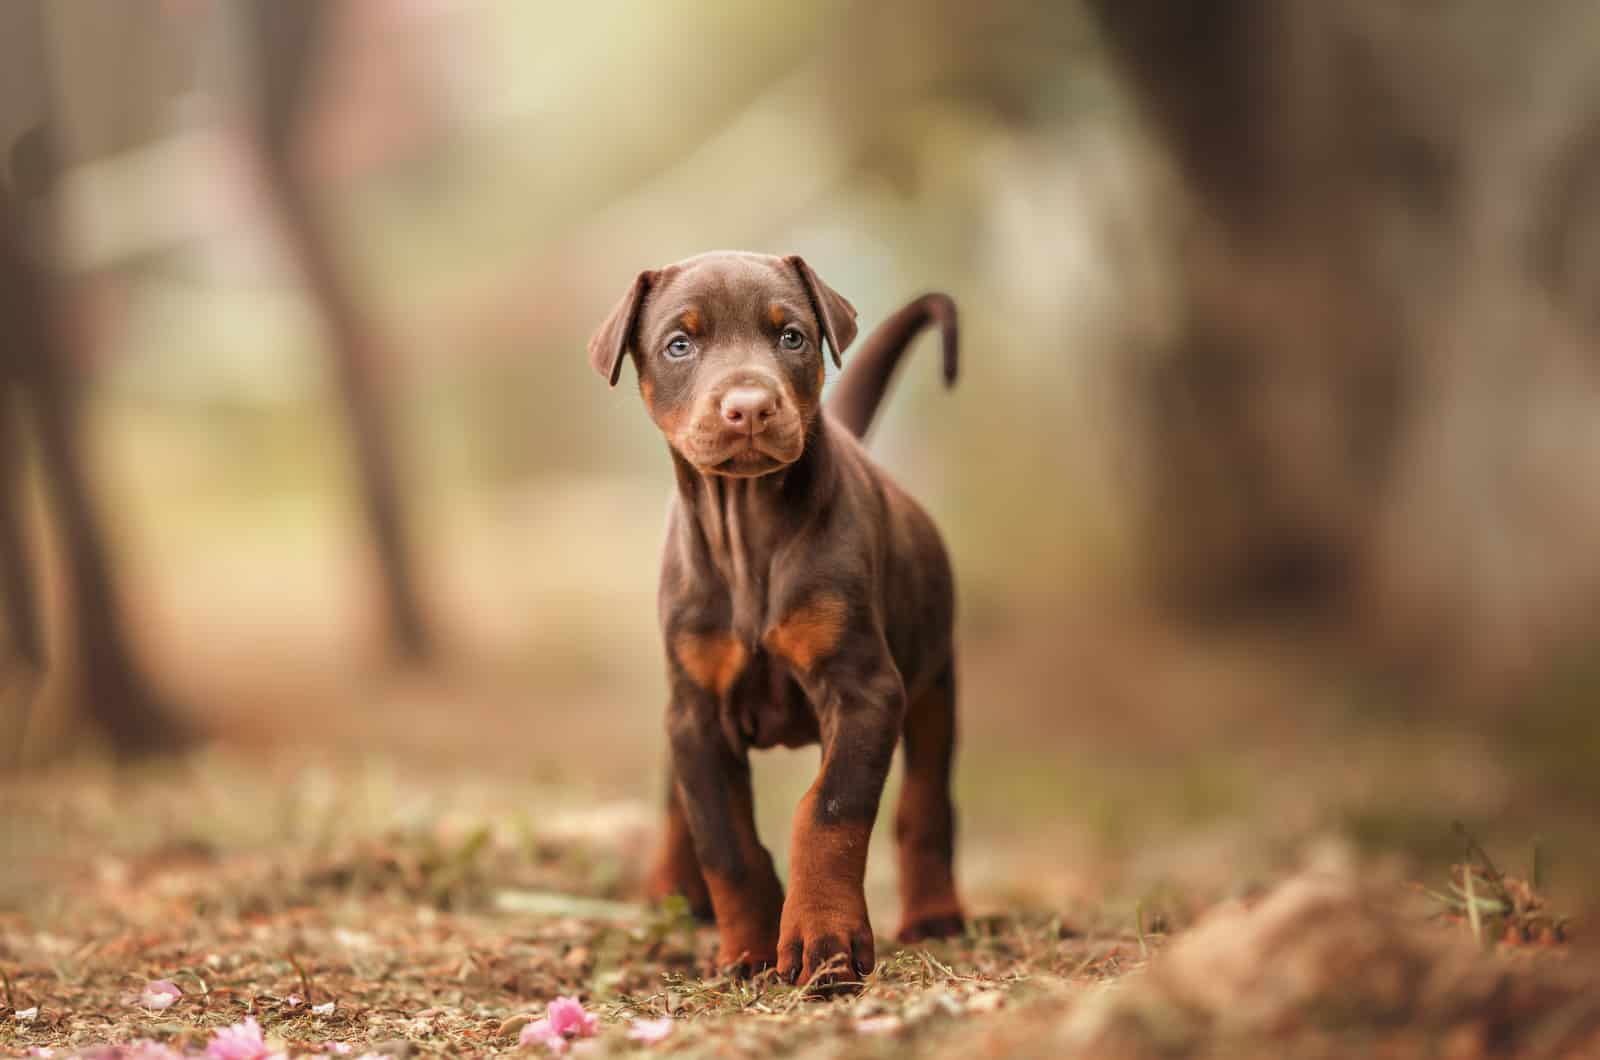 Doberman puppy standing in the park